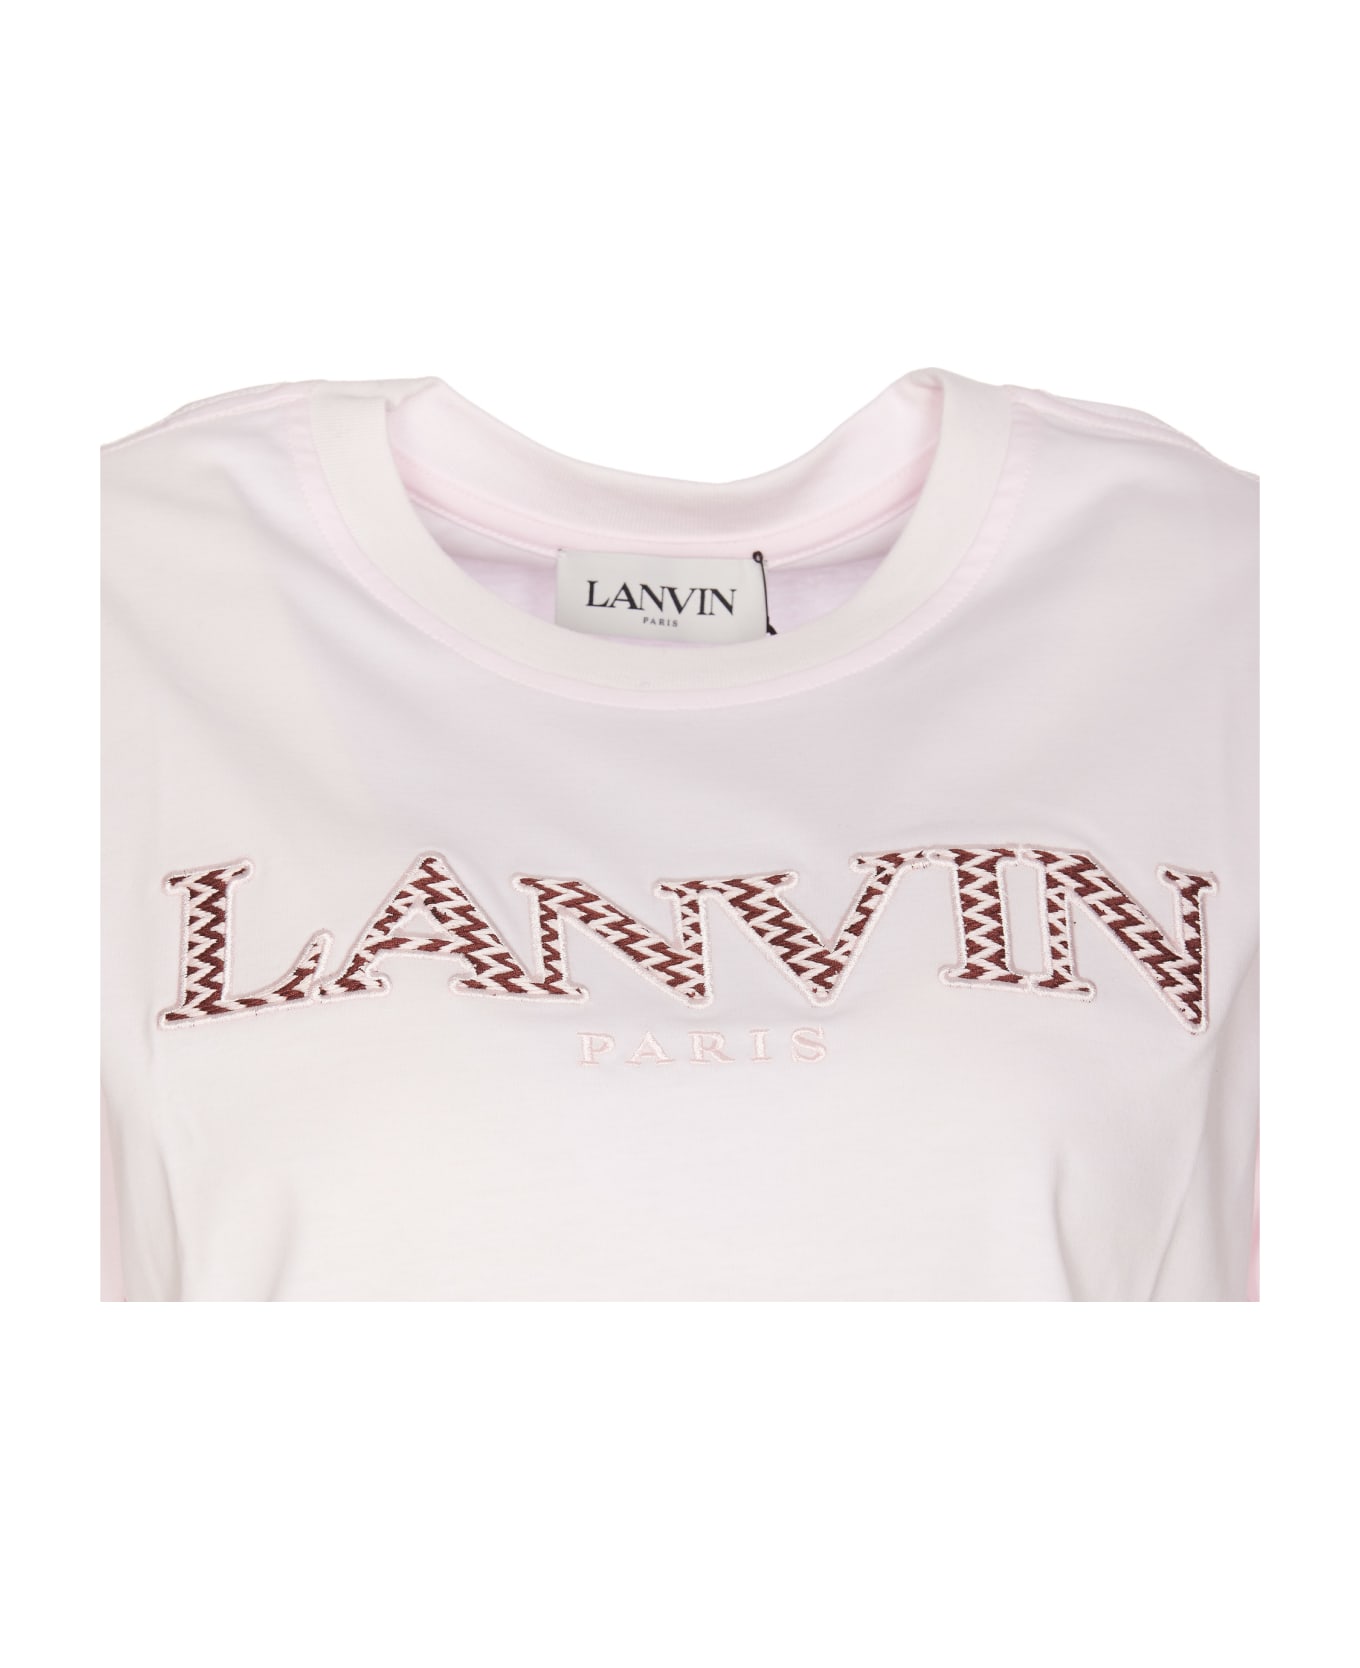 Lanvin Cropped Logo Lanvin Paris T-shirt - Pink